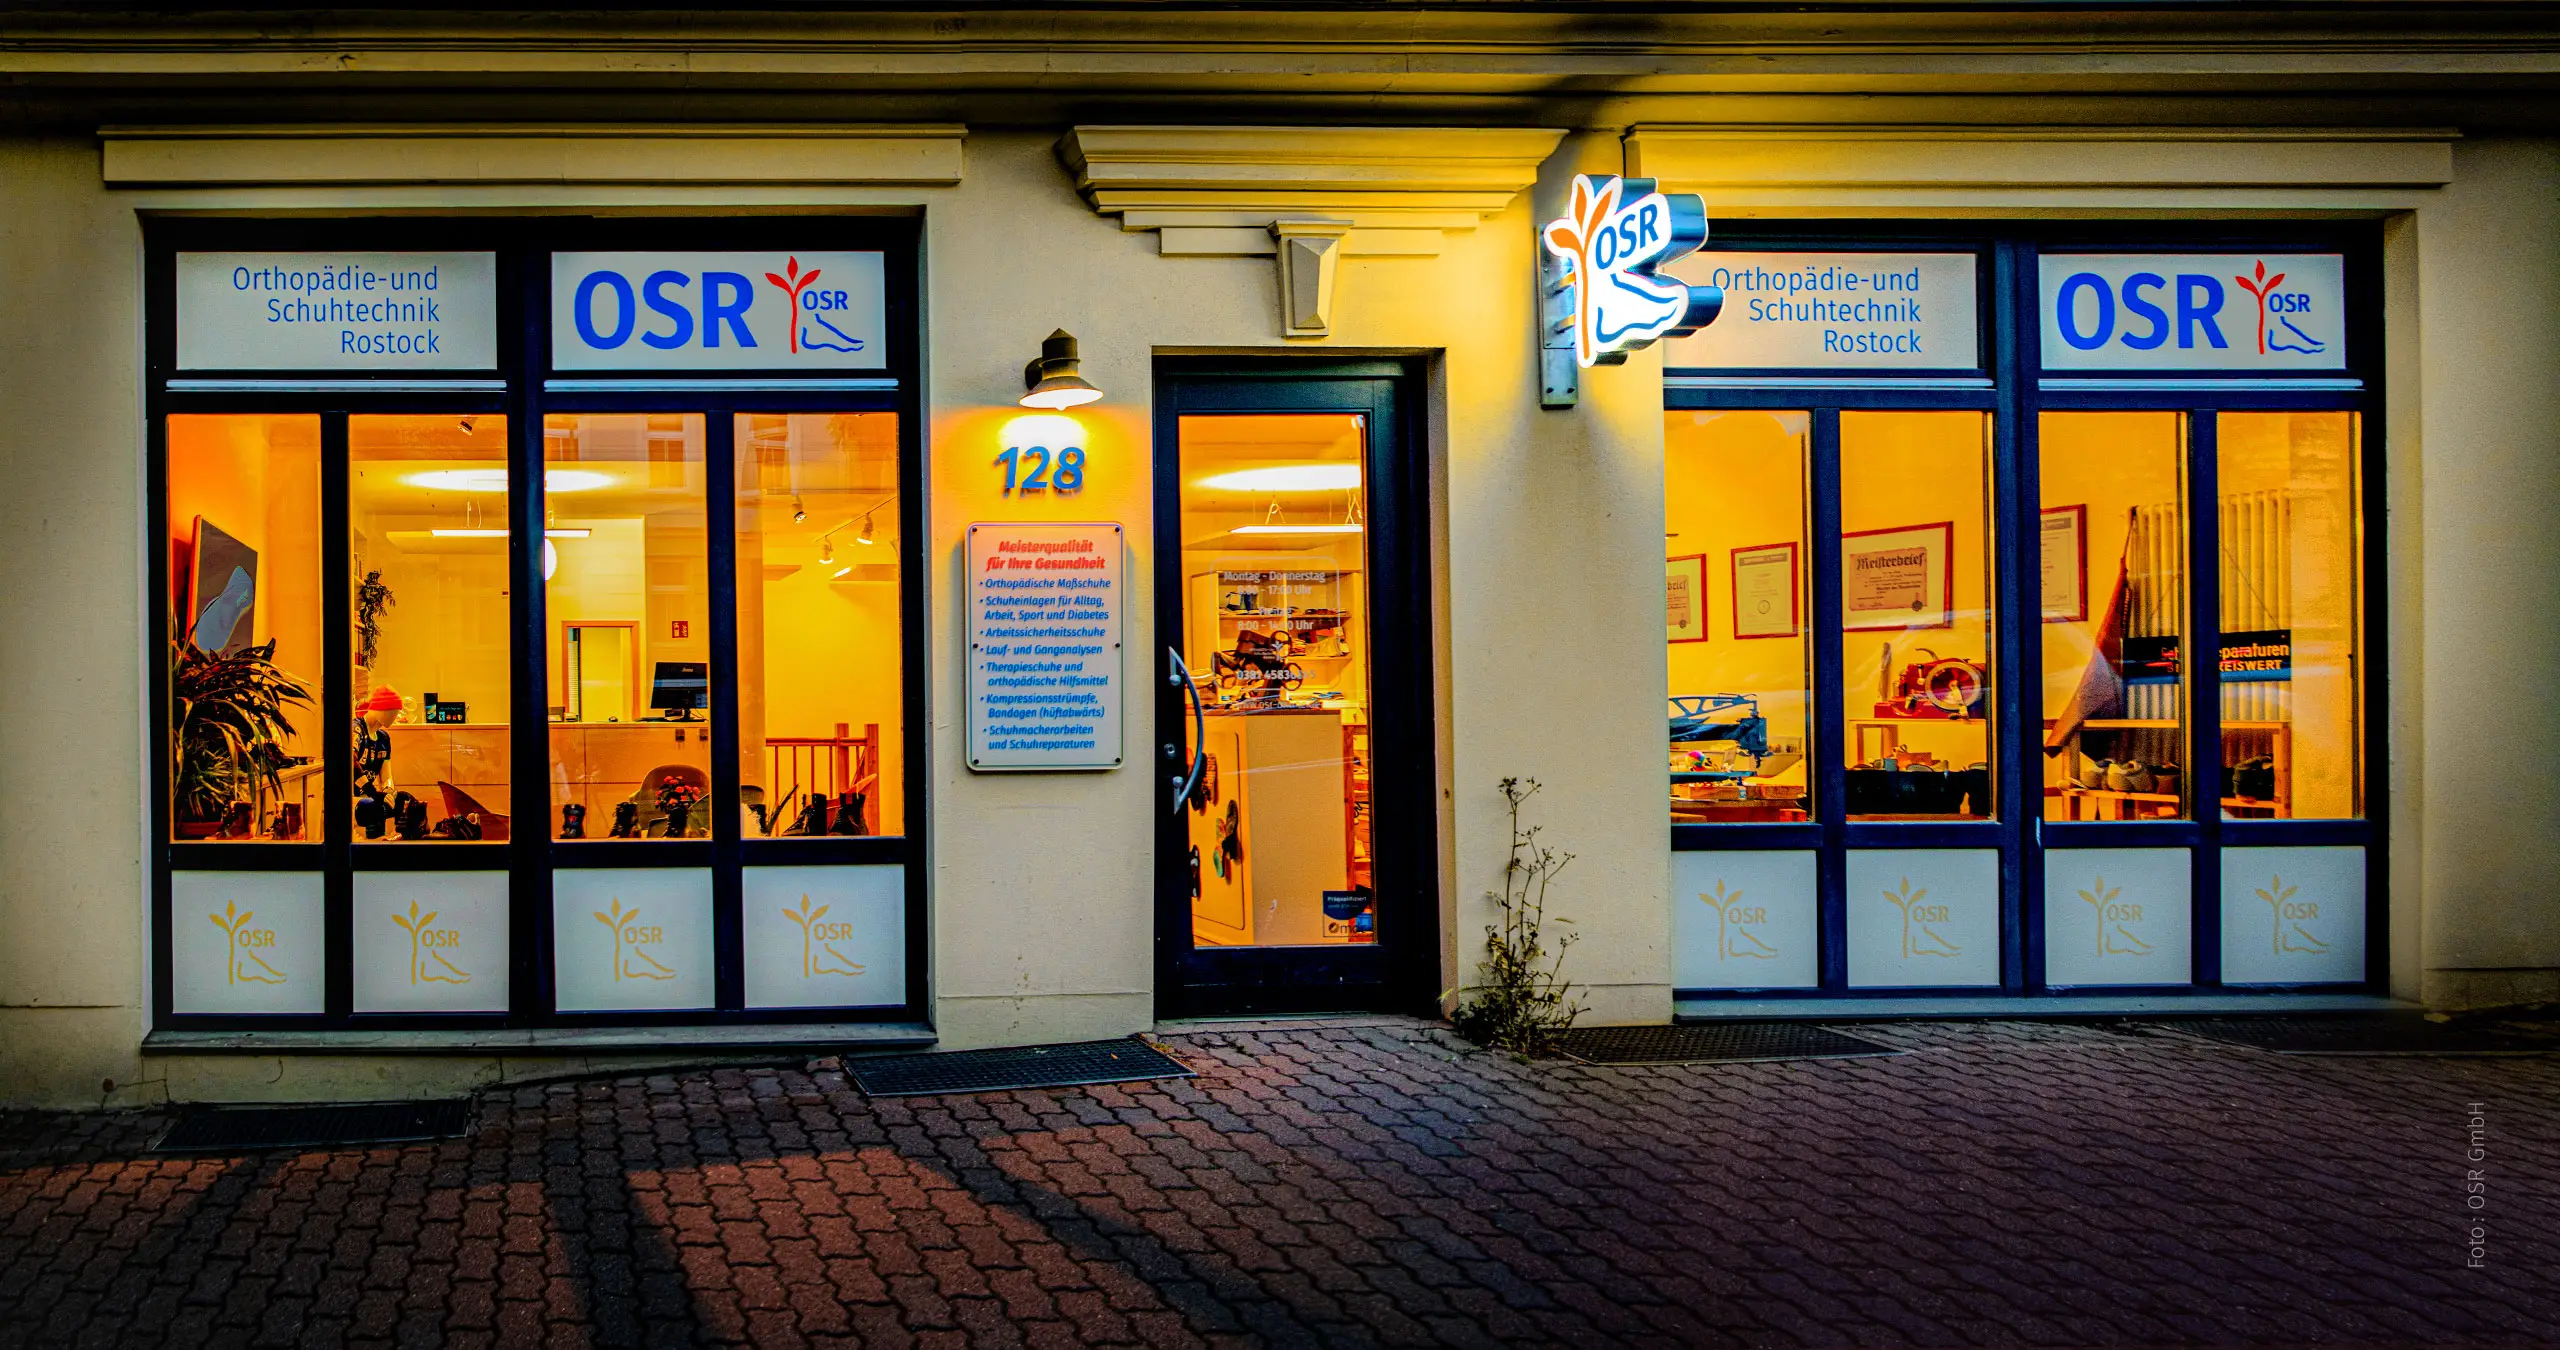 Zentrale OSR Rostock in der Doberaner Str. 128